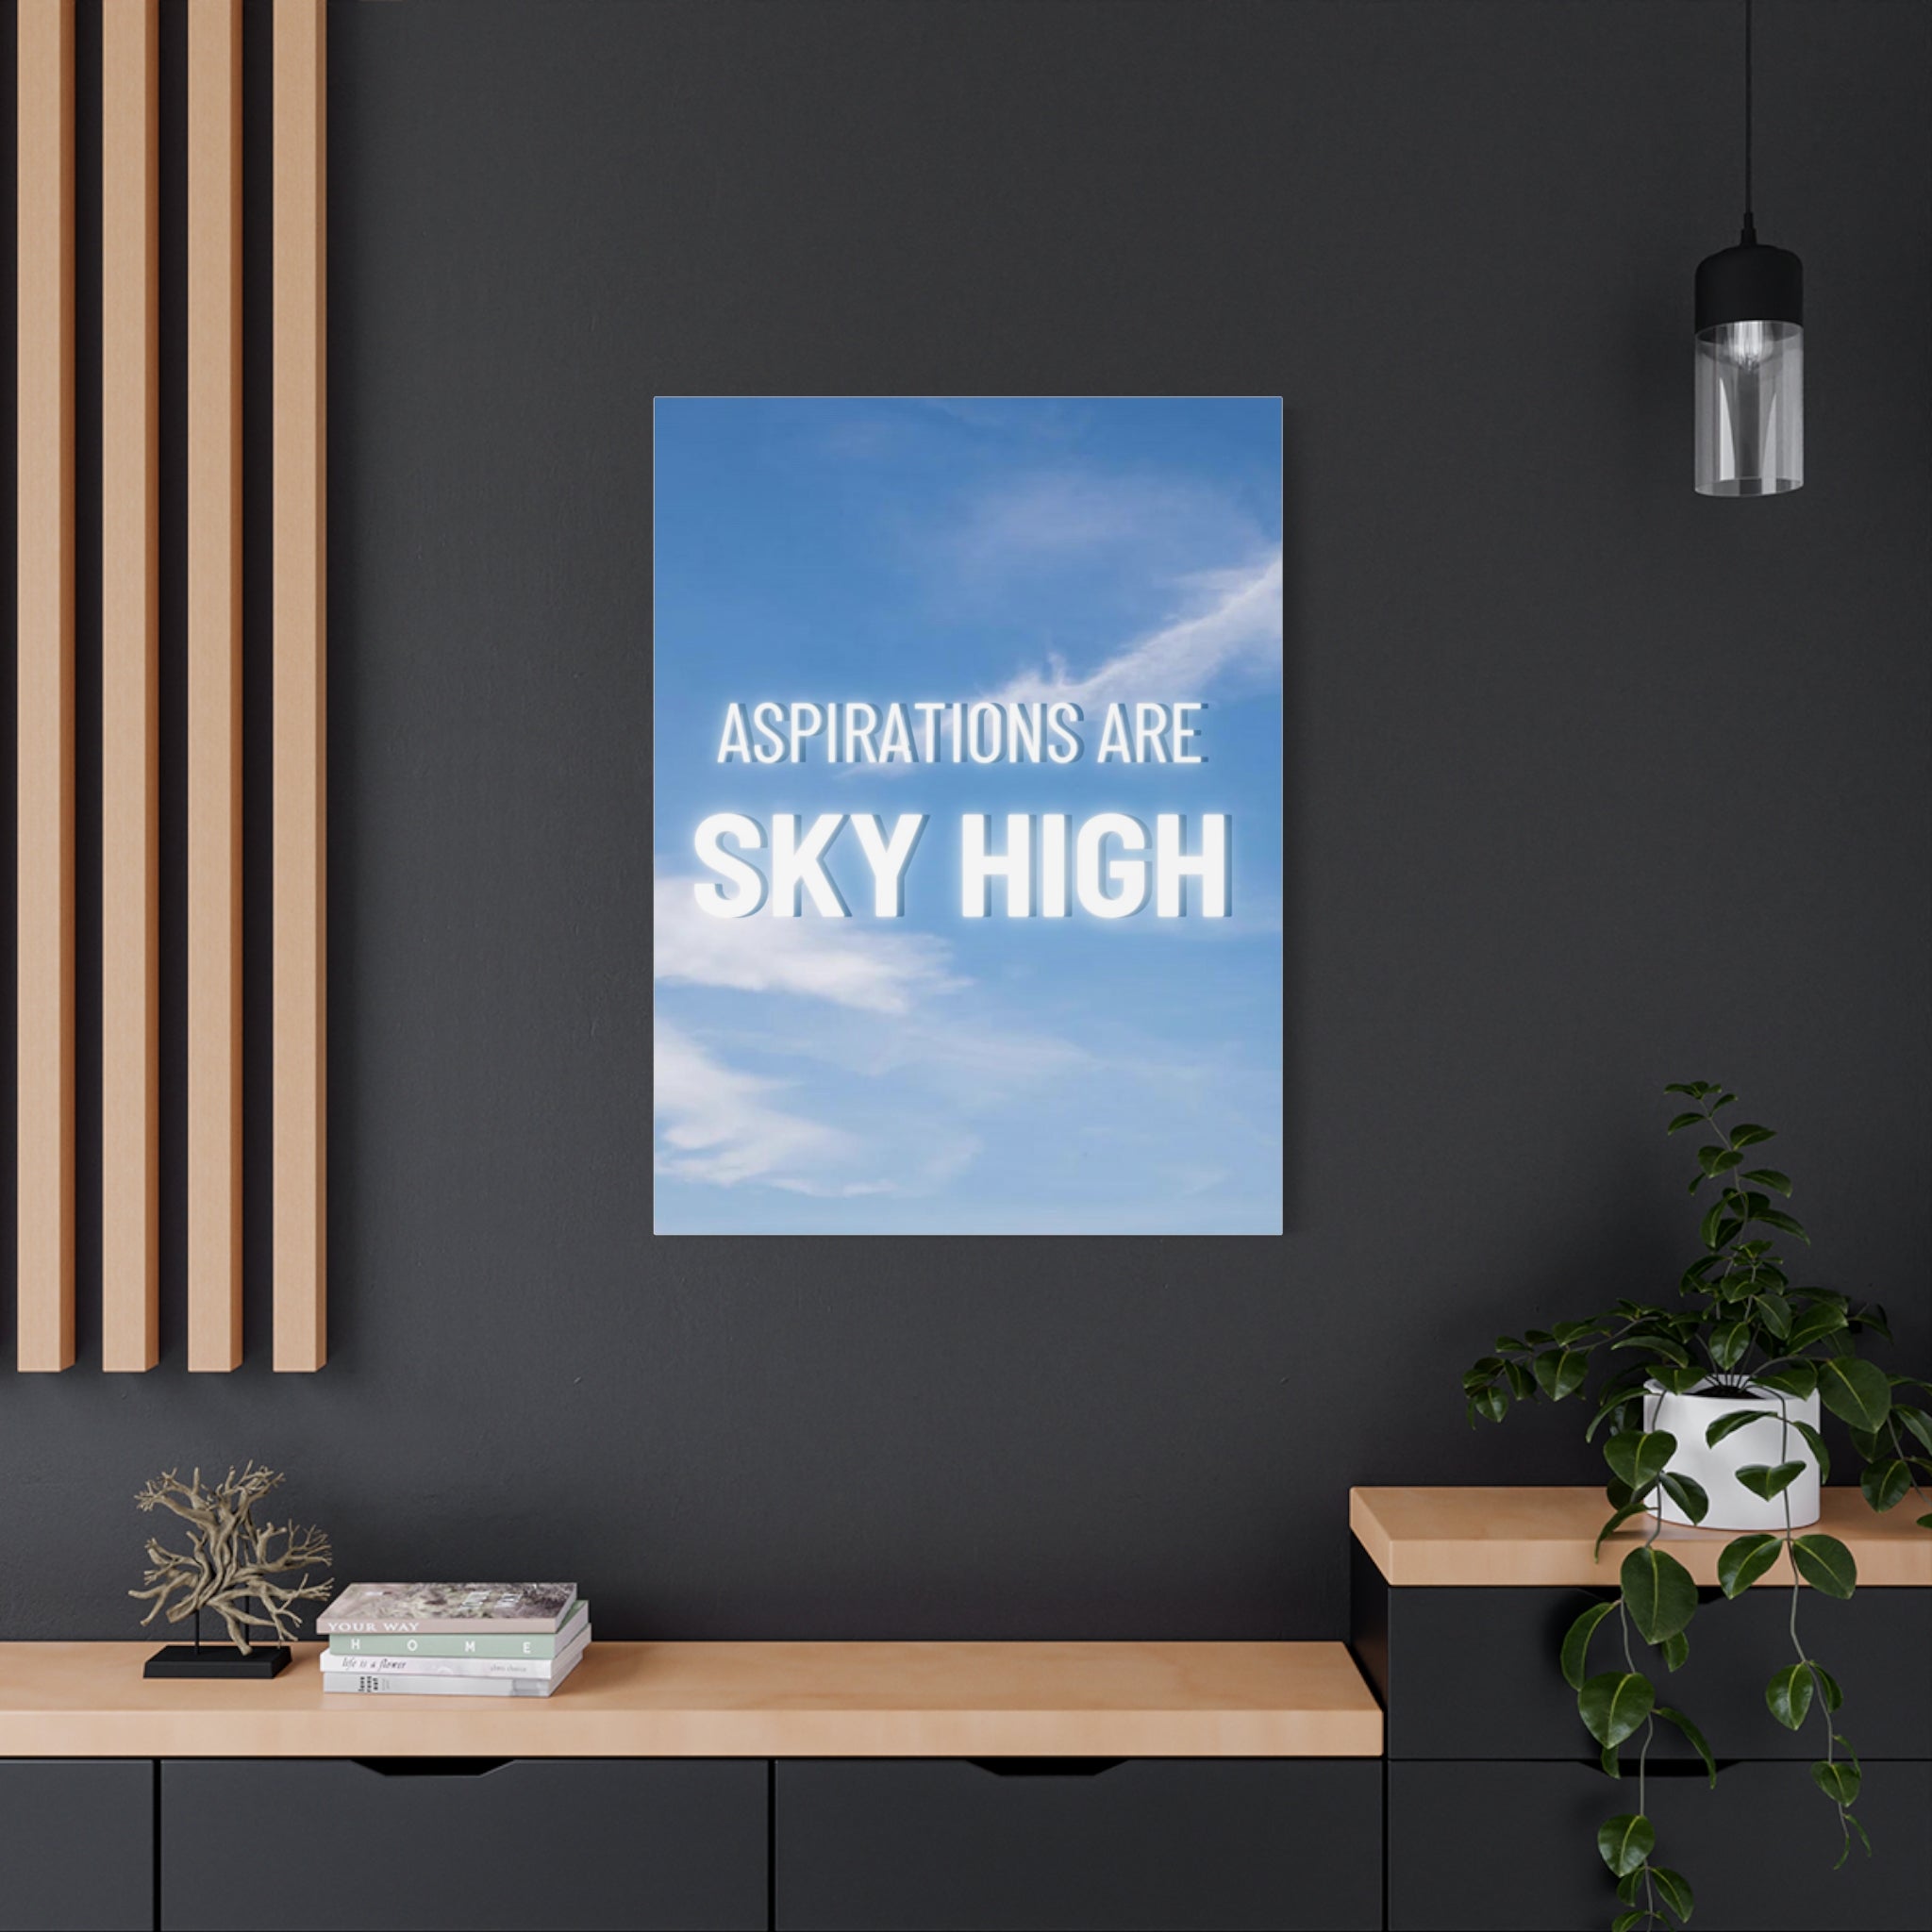 Aspirations Are Sky High Wall Art additional image 3